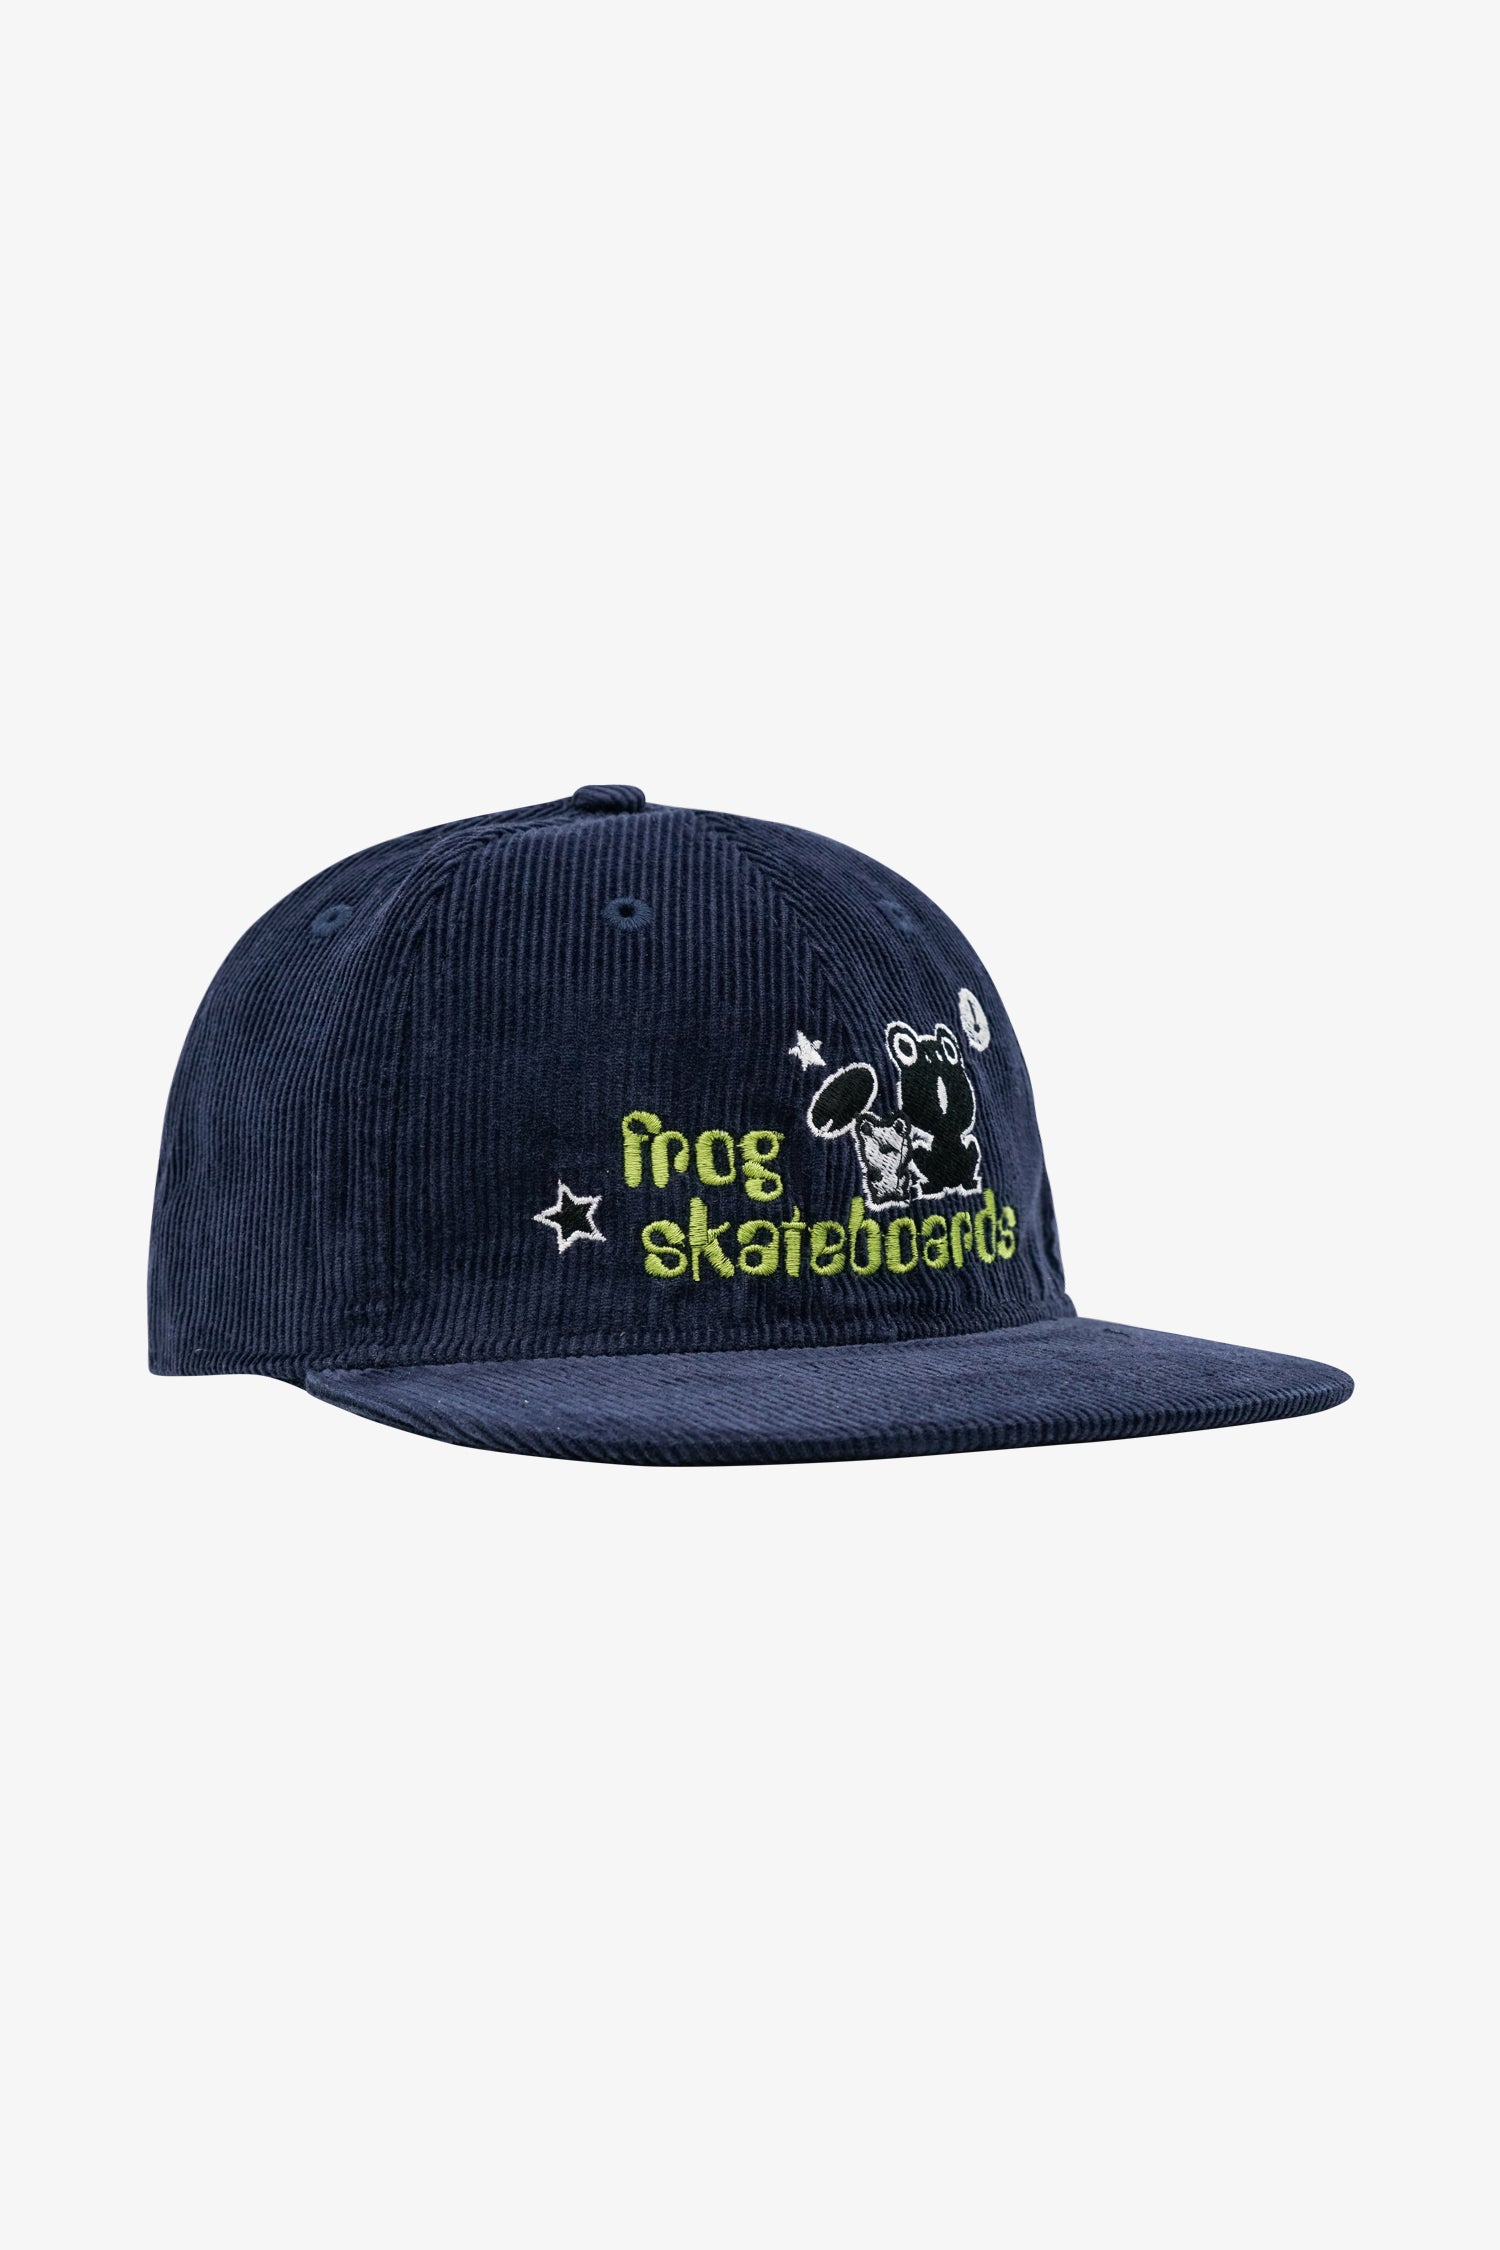 Selectshop FRAME - FROG SKATEBOARDS Frog Skateboards Corduroy Hat Headwear Dubai